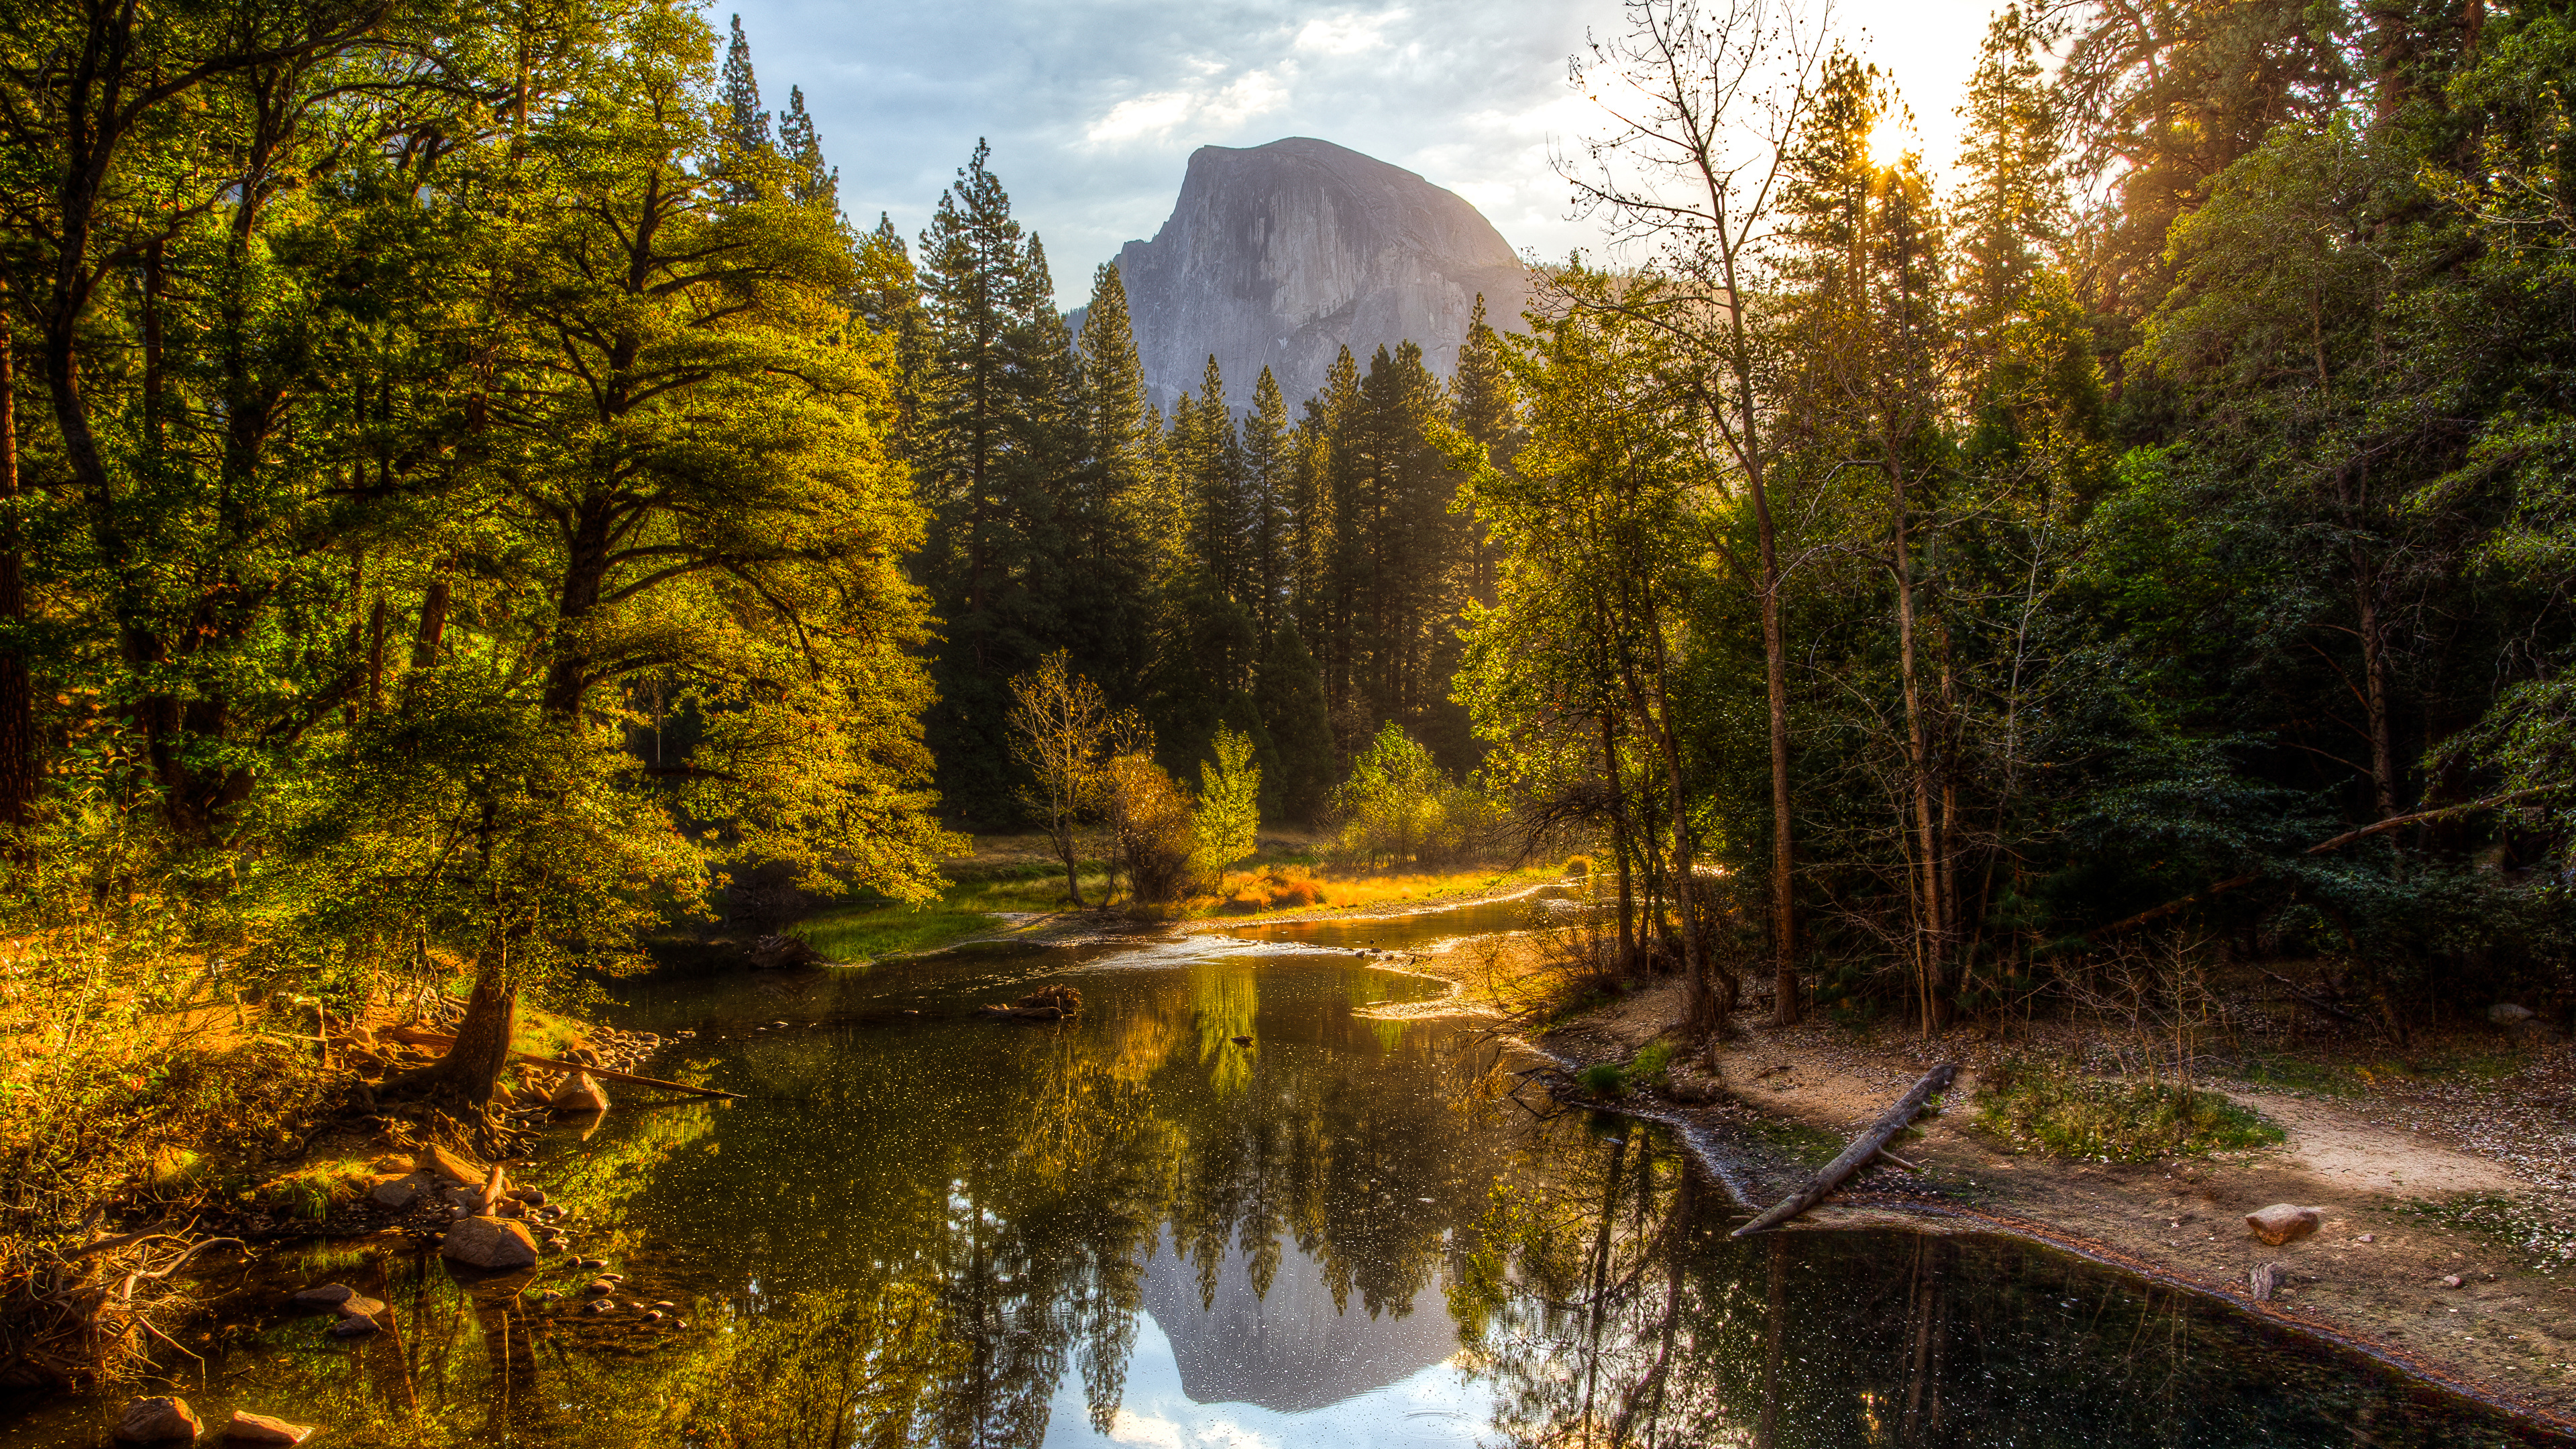 Desktop Wallpapers Yosemite Usa Autumn Nature Mountains 3840x2160